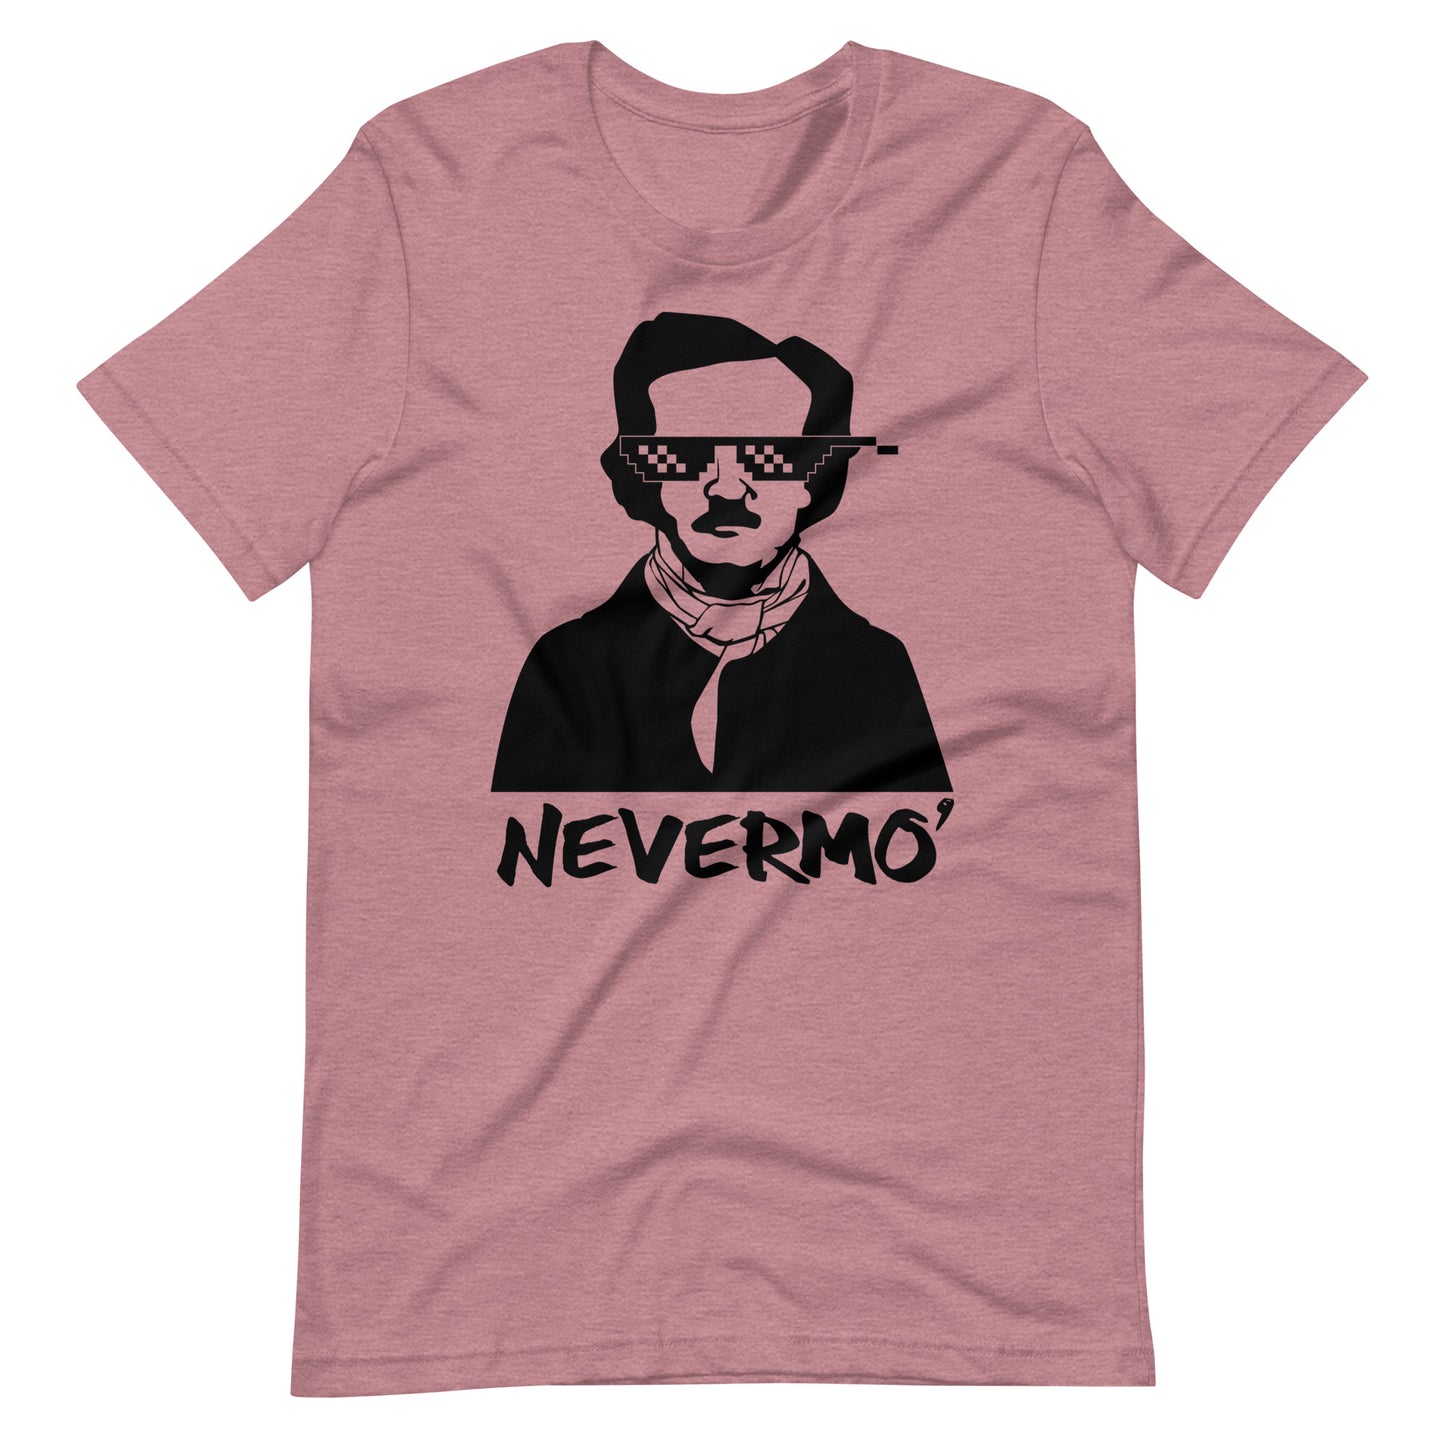 Women's Edgar Allan Poe "Nevermo" t-shirt - Heather Orchid Front